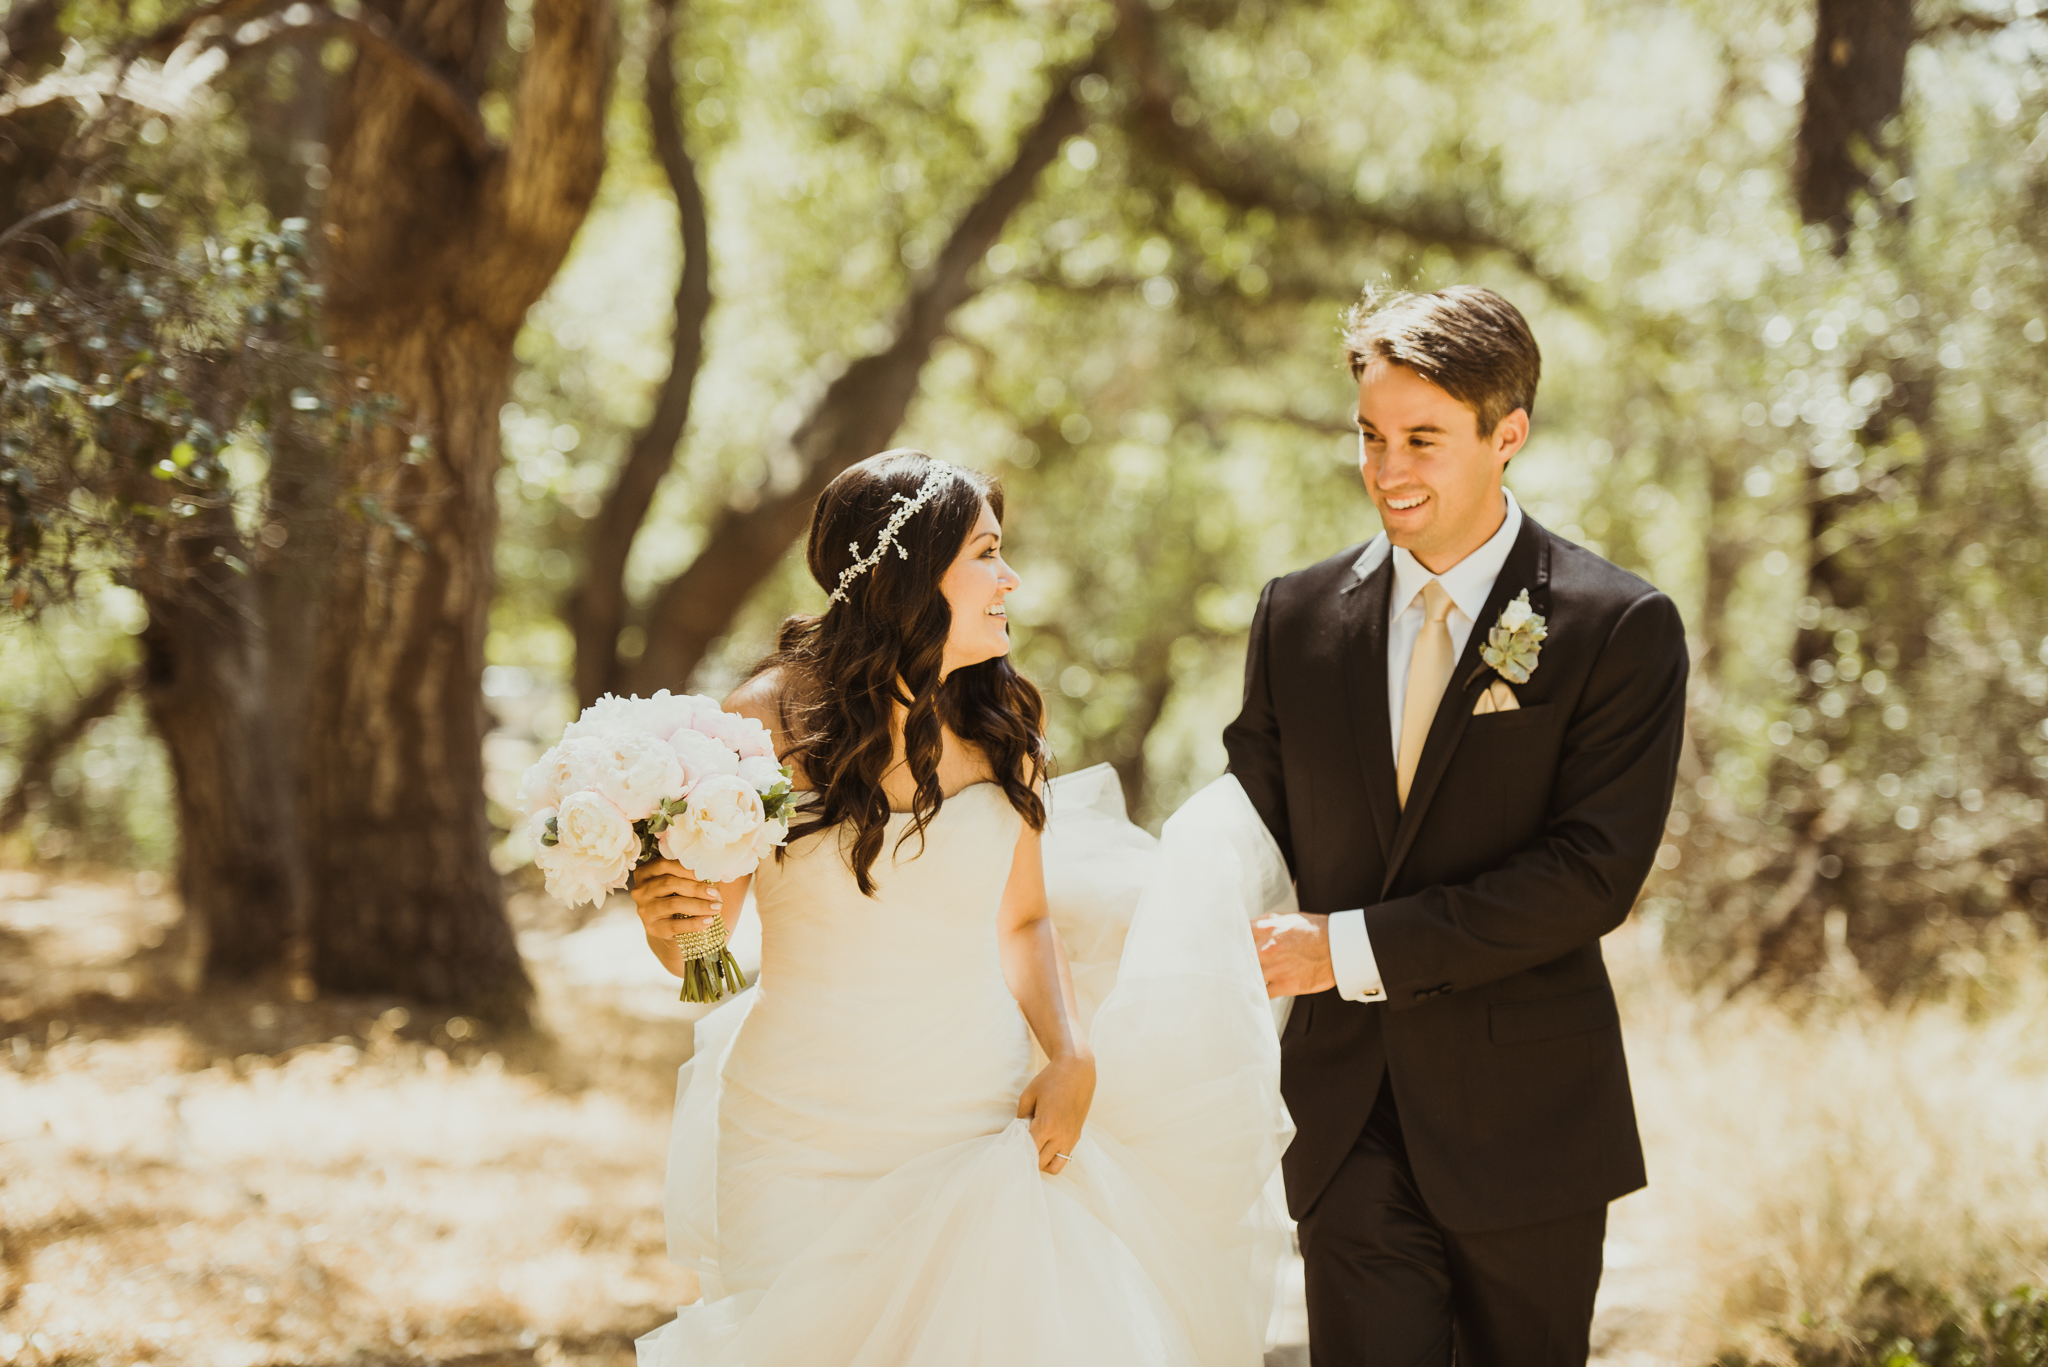 ©Isaiah & Taylor Photography - Inn of the Seventh Ray Wedding, Topanga Canyon California-43.jpg